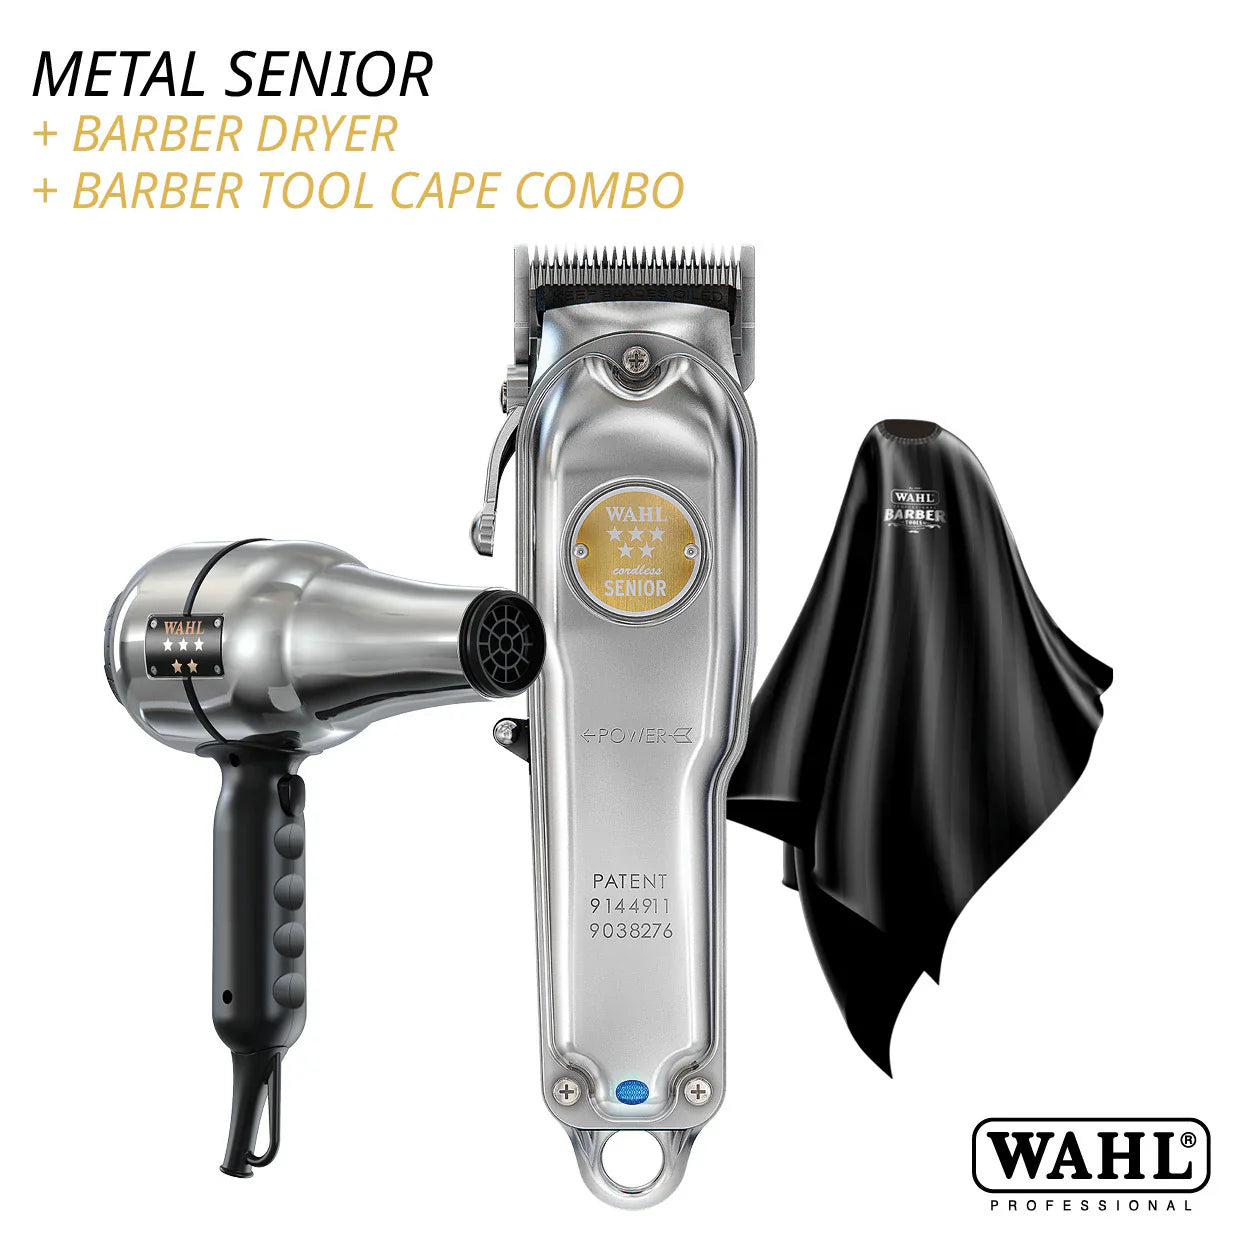 Wahl Metal Senior, Barber Dryer & Barber Tool Cape Combo